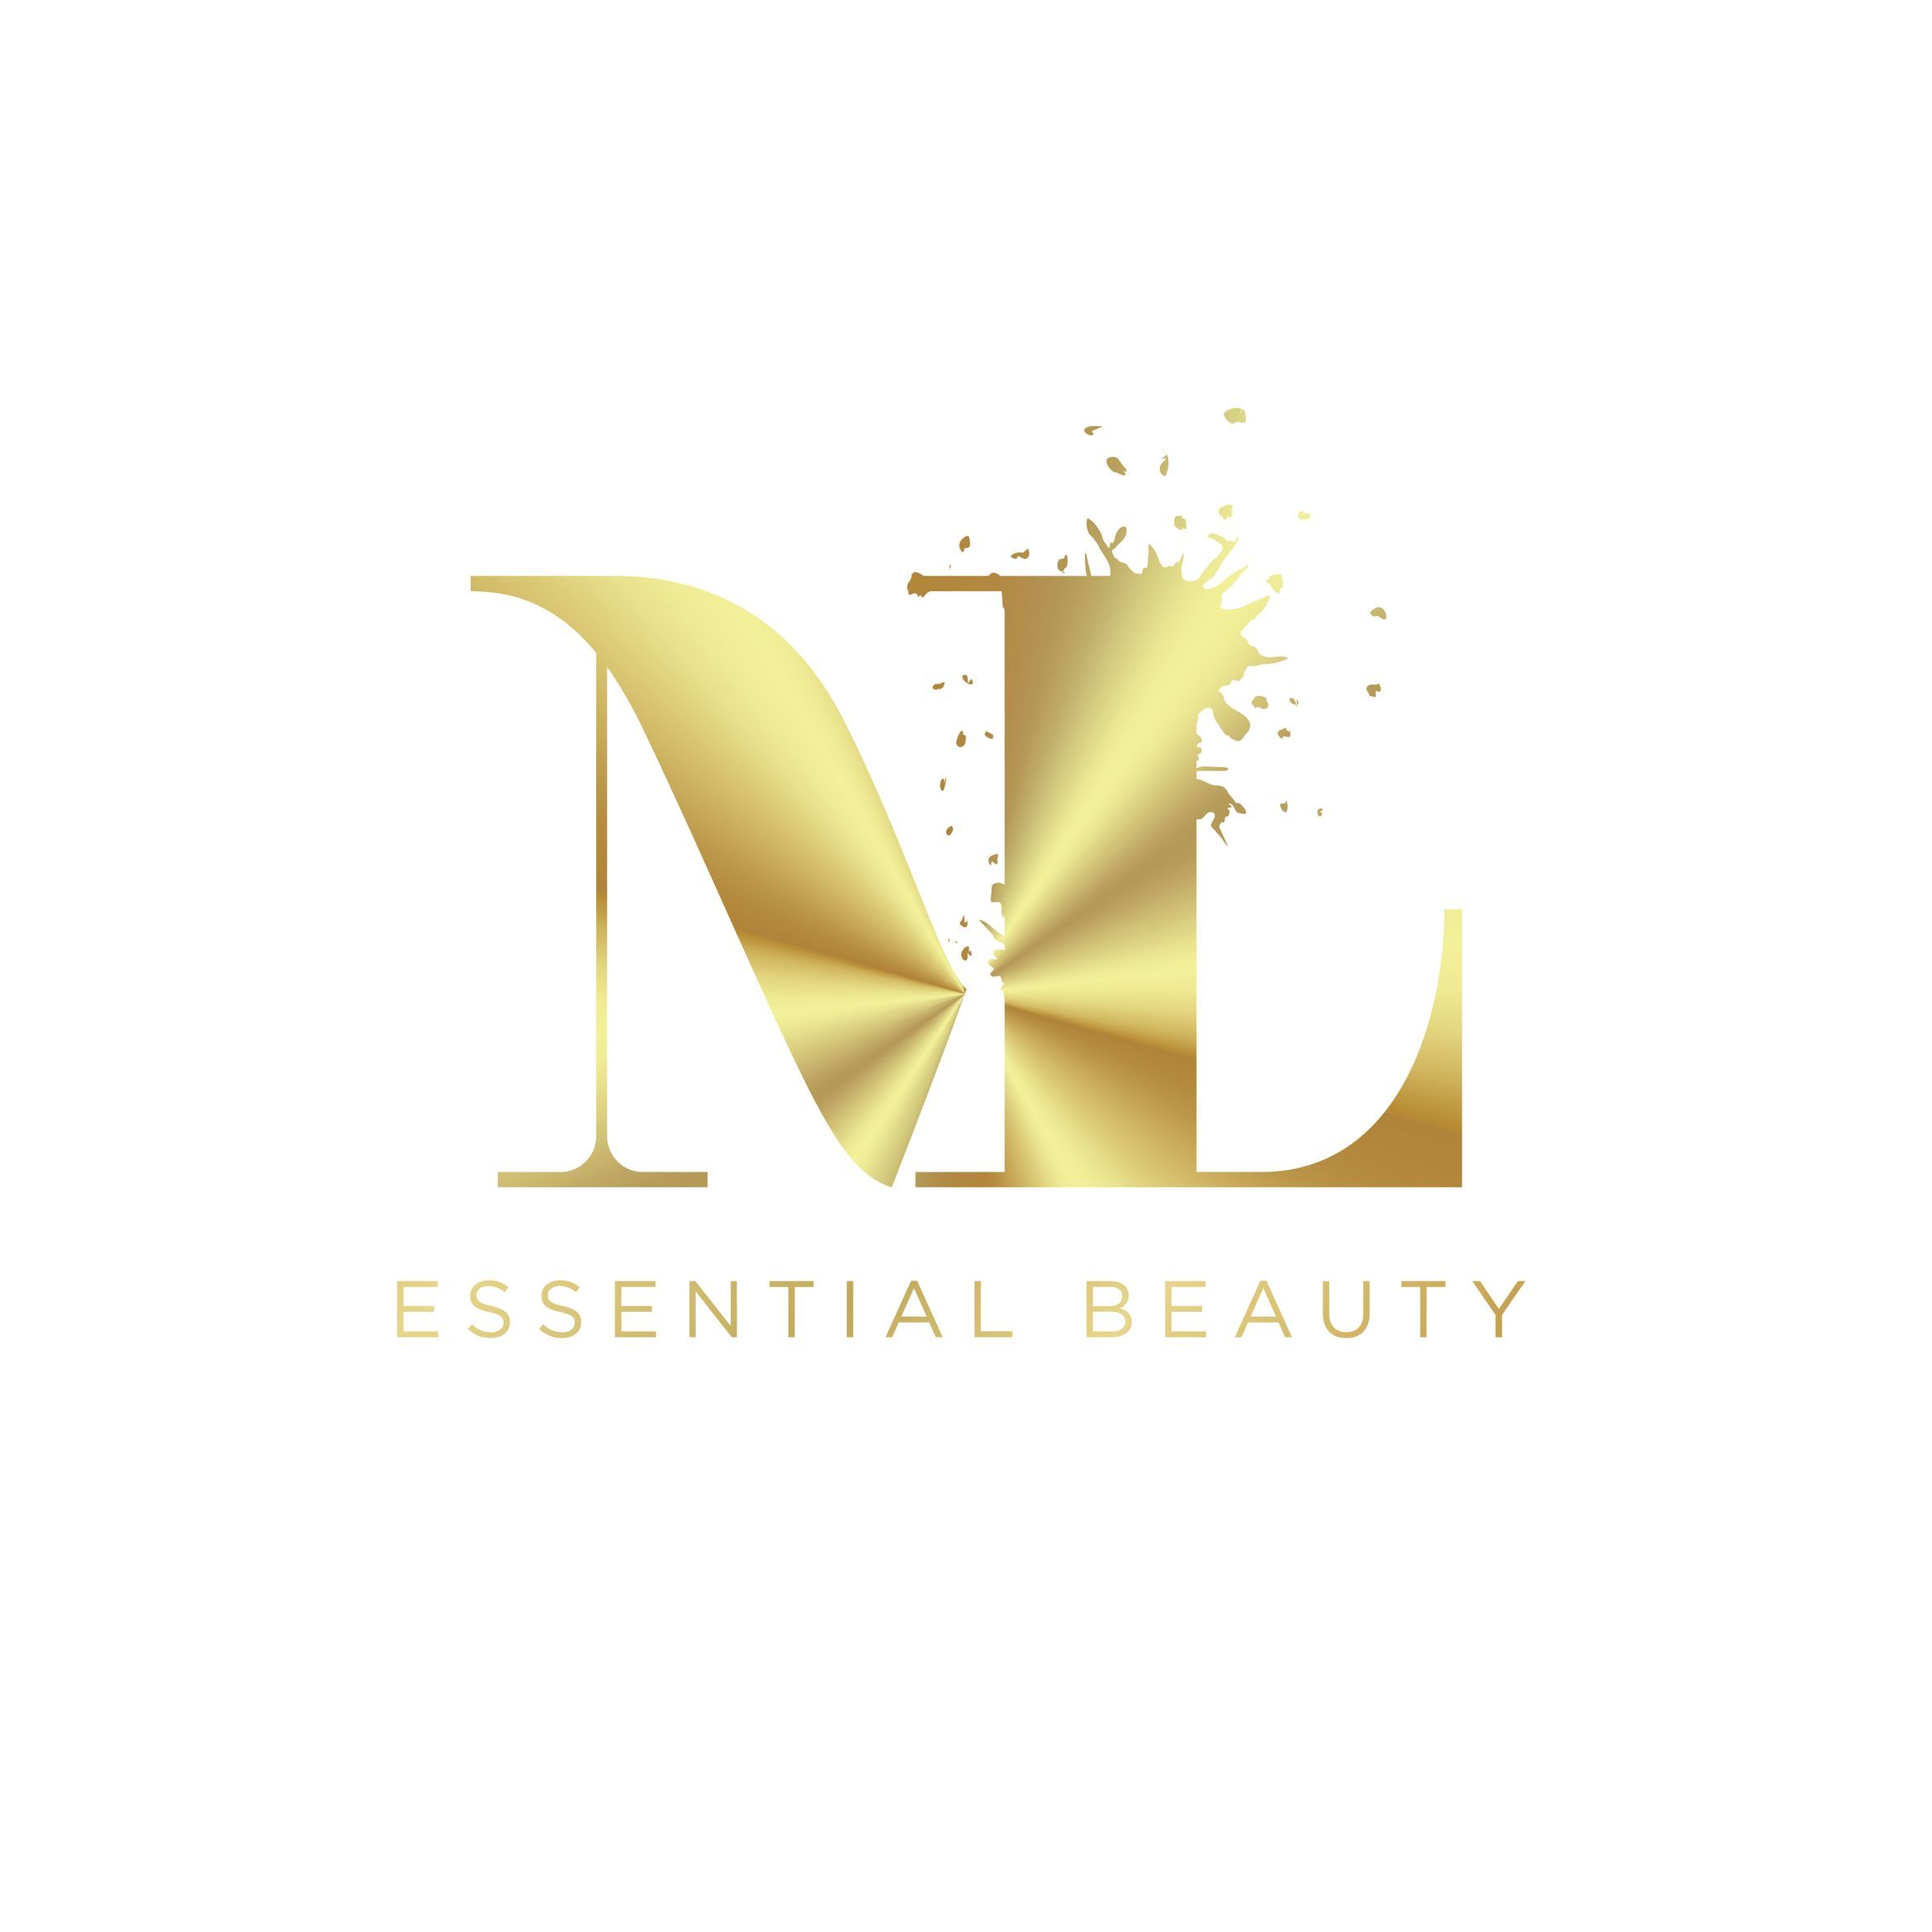 ML Beautyessential, 8439 N Lake Dr, Dublin, 94568